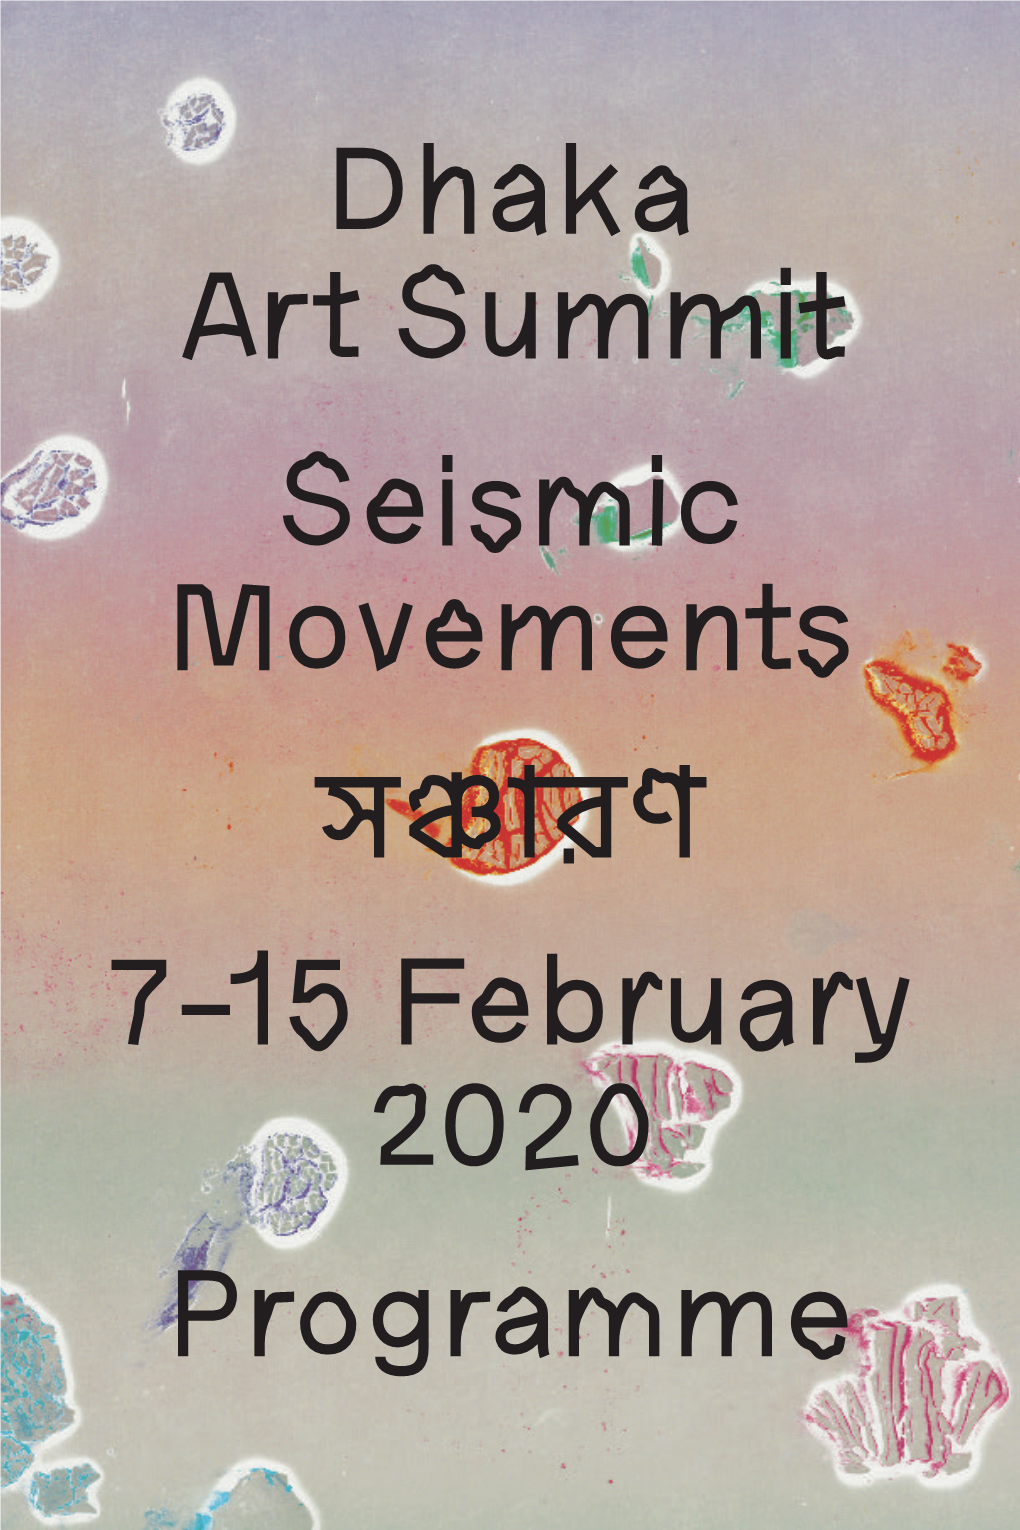 Dhaka Art Summit Seismic Movements স ারণ 7–15 February